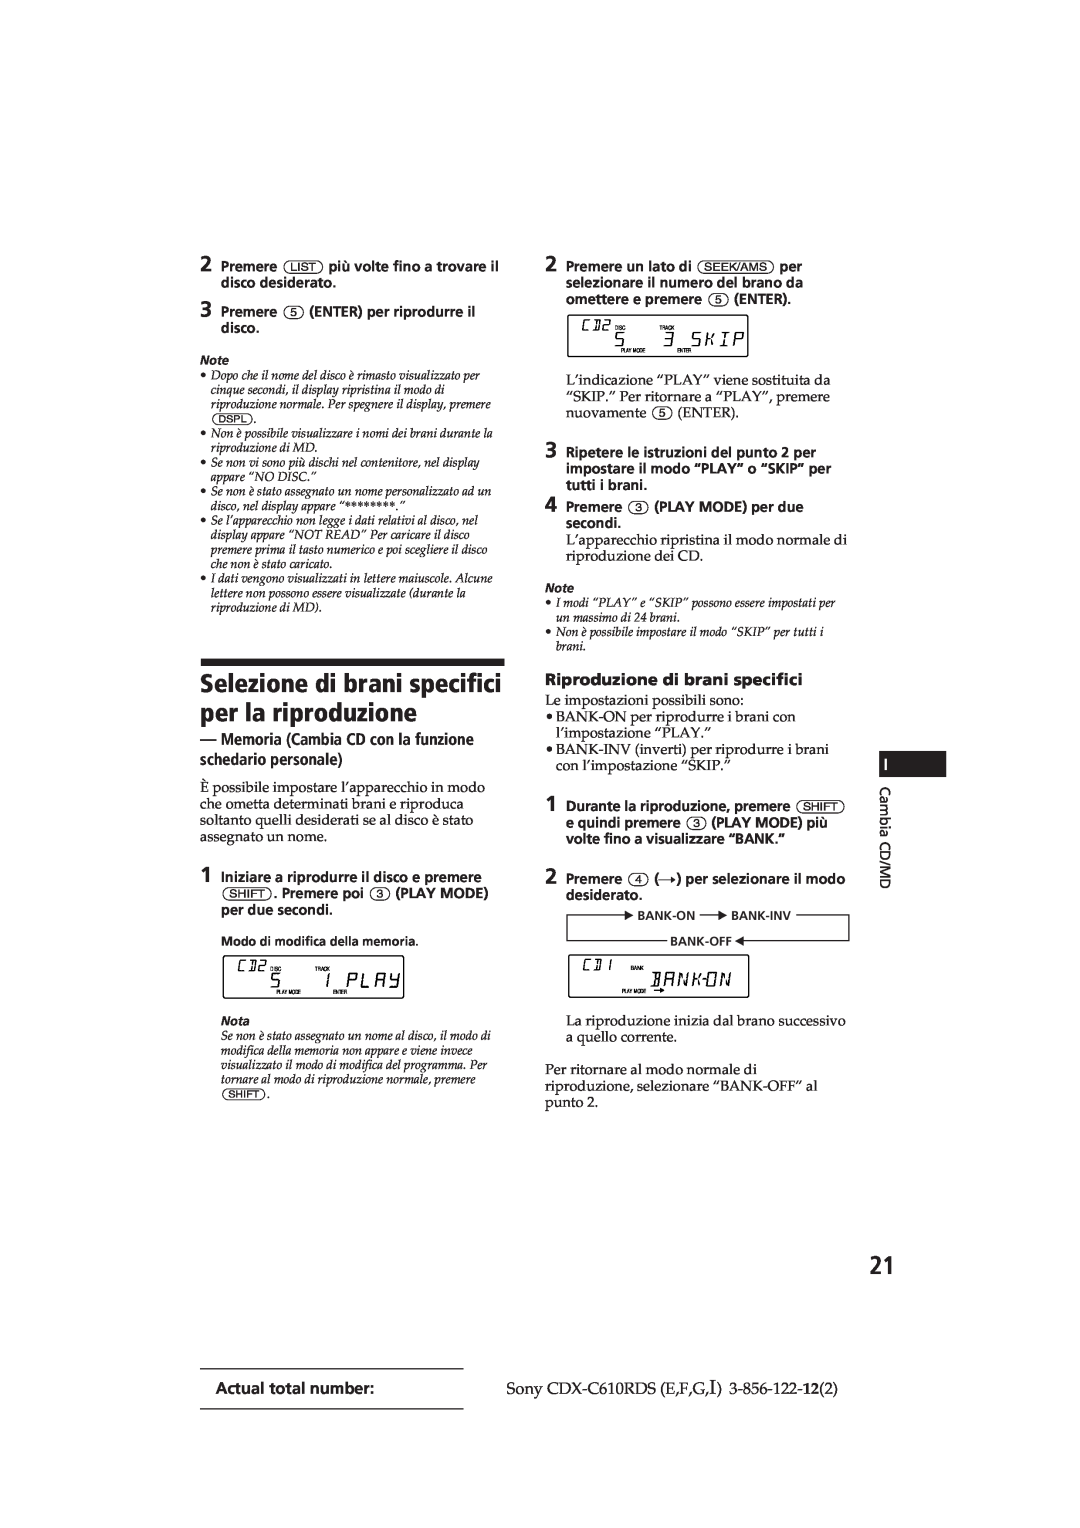 Sony CDX-C610RDS manual Selezione di brani specifici per la riproduzione, Riproduzione di brani specifici, Skip, Bankon 